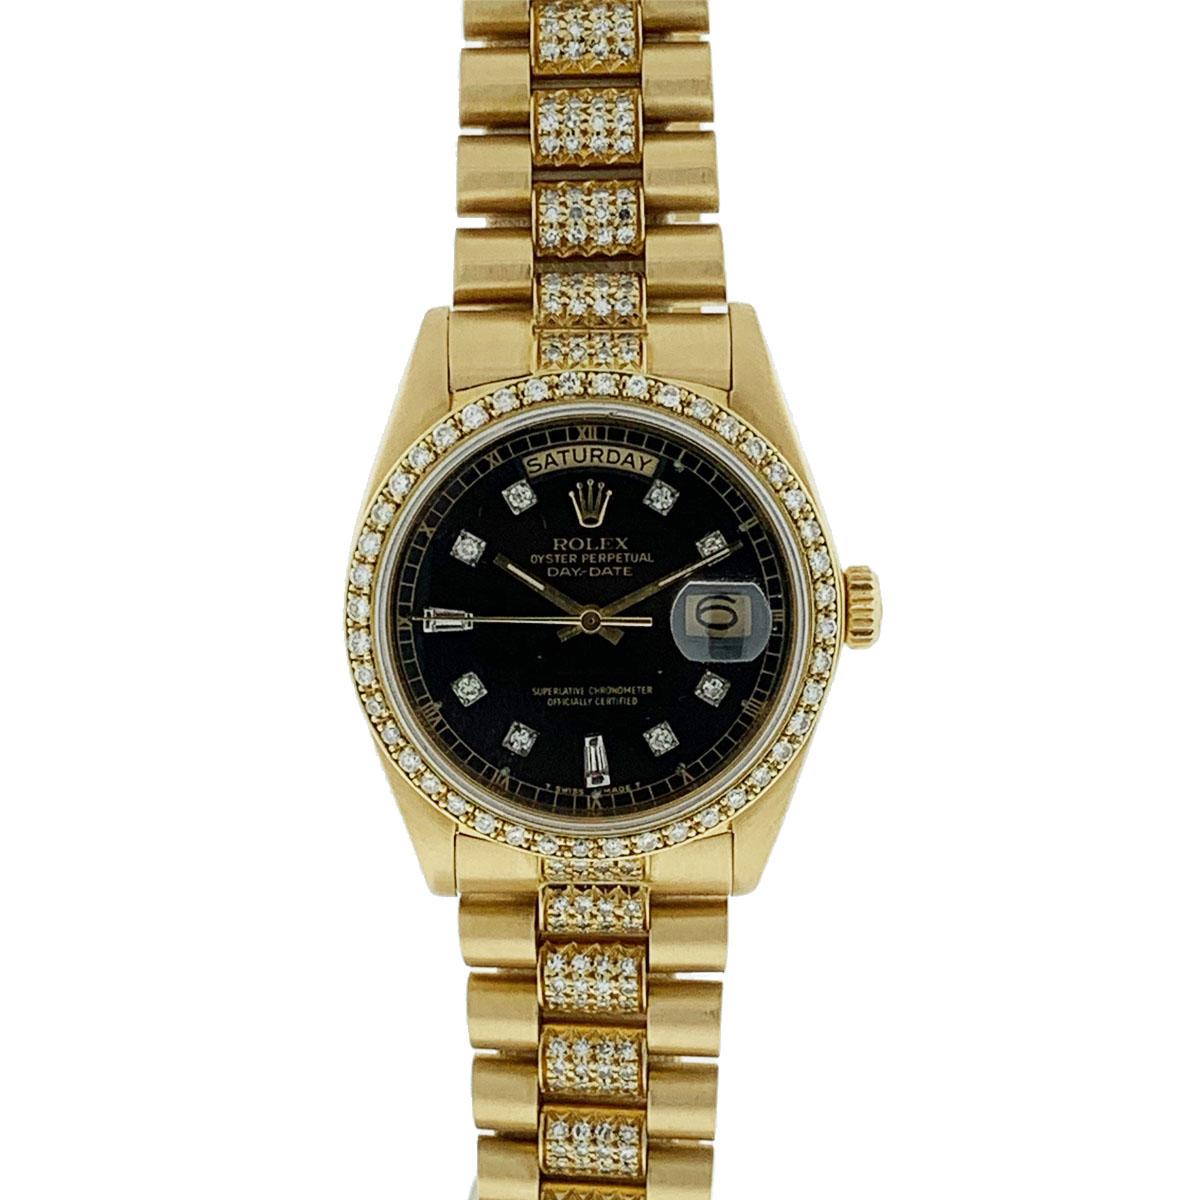 Company - Rolex
Model - 18038 Day-Date Single Quick President
Case Metal - 18k Yellow Gold
Case Measurement - 36mm
Bracelet - Custom 18k Yellow Gold & Diamonds- Fits Wrist Size - 7.5